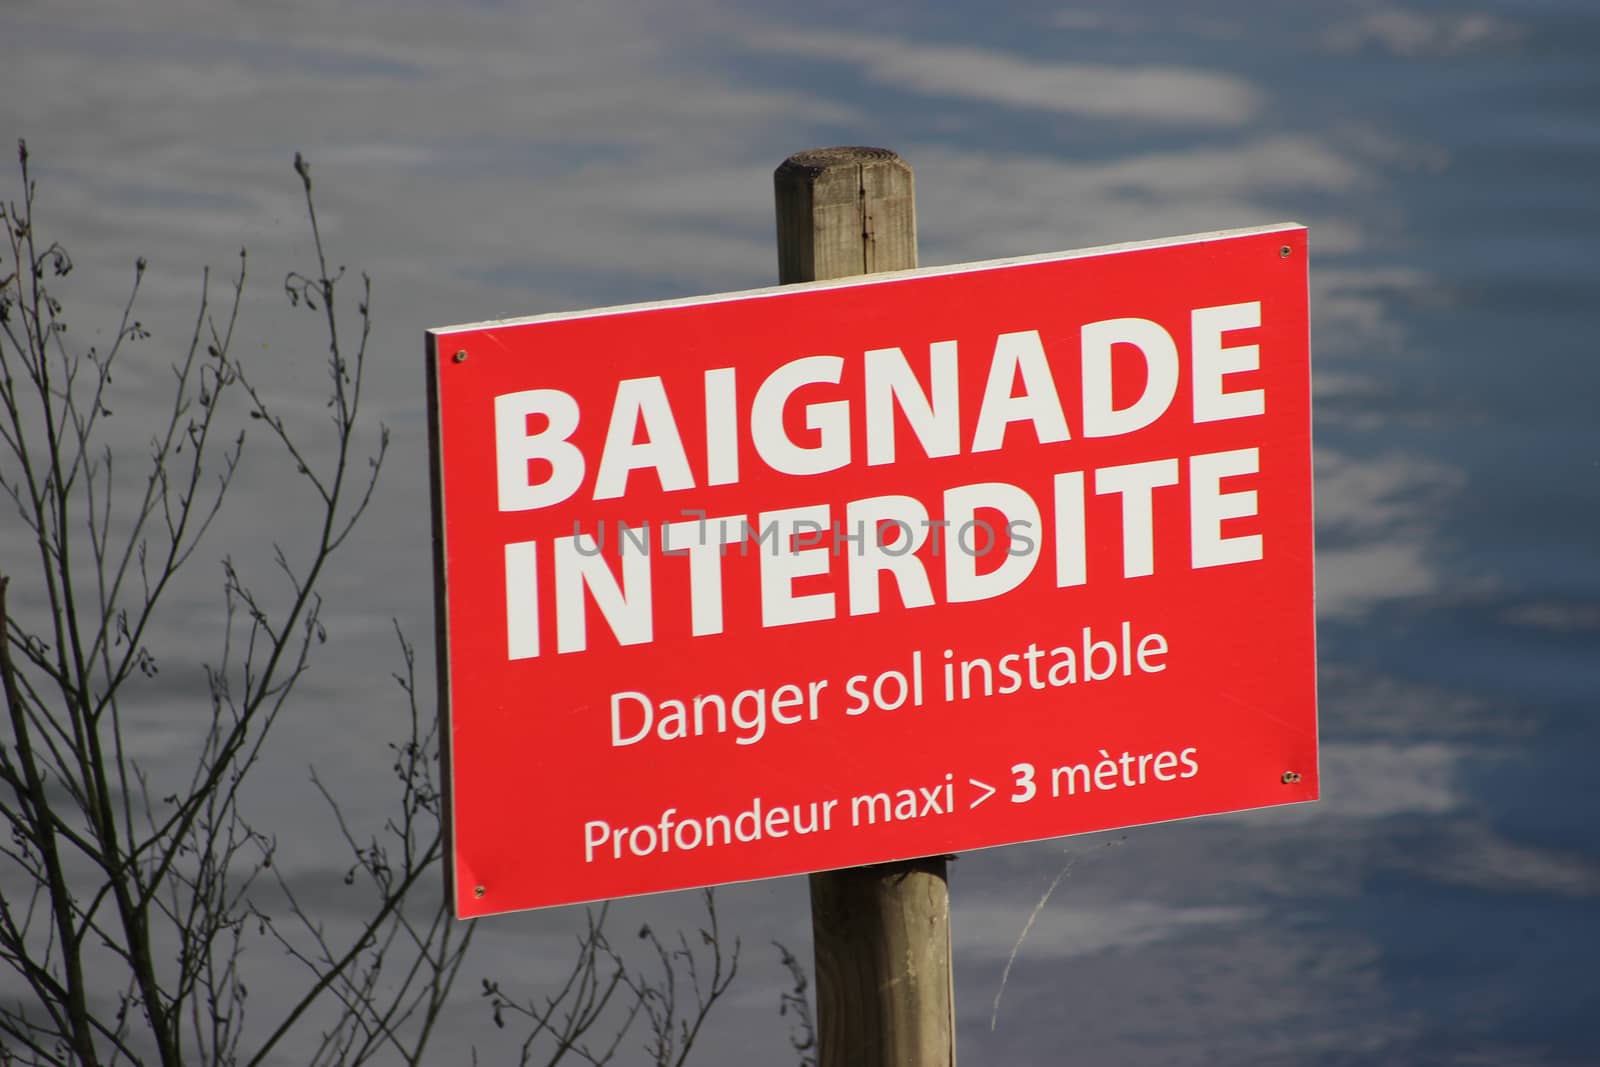 Panneau Baignade Intredite Danger sol instable - Profondeur maxi 3 mètres